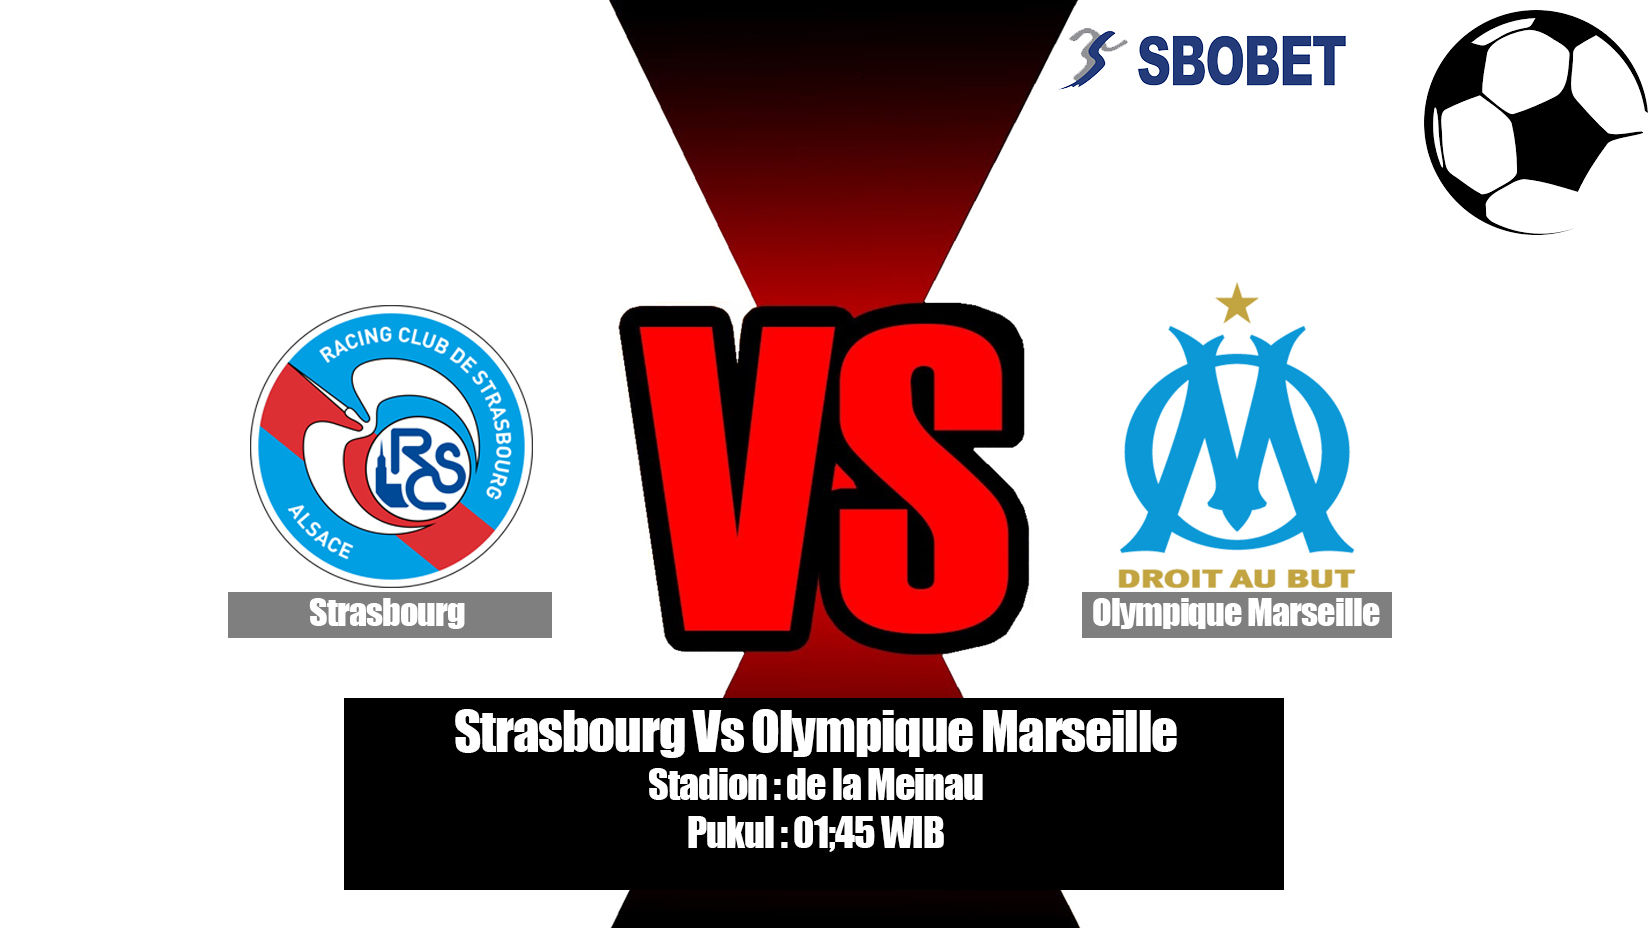 Prediksi Bola Strasbourg Vs Olympique Marseille 4 Mei 2019